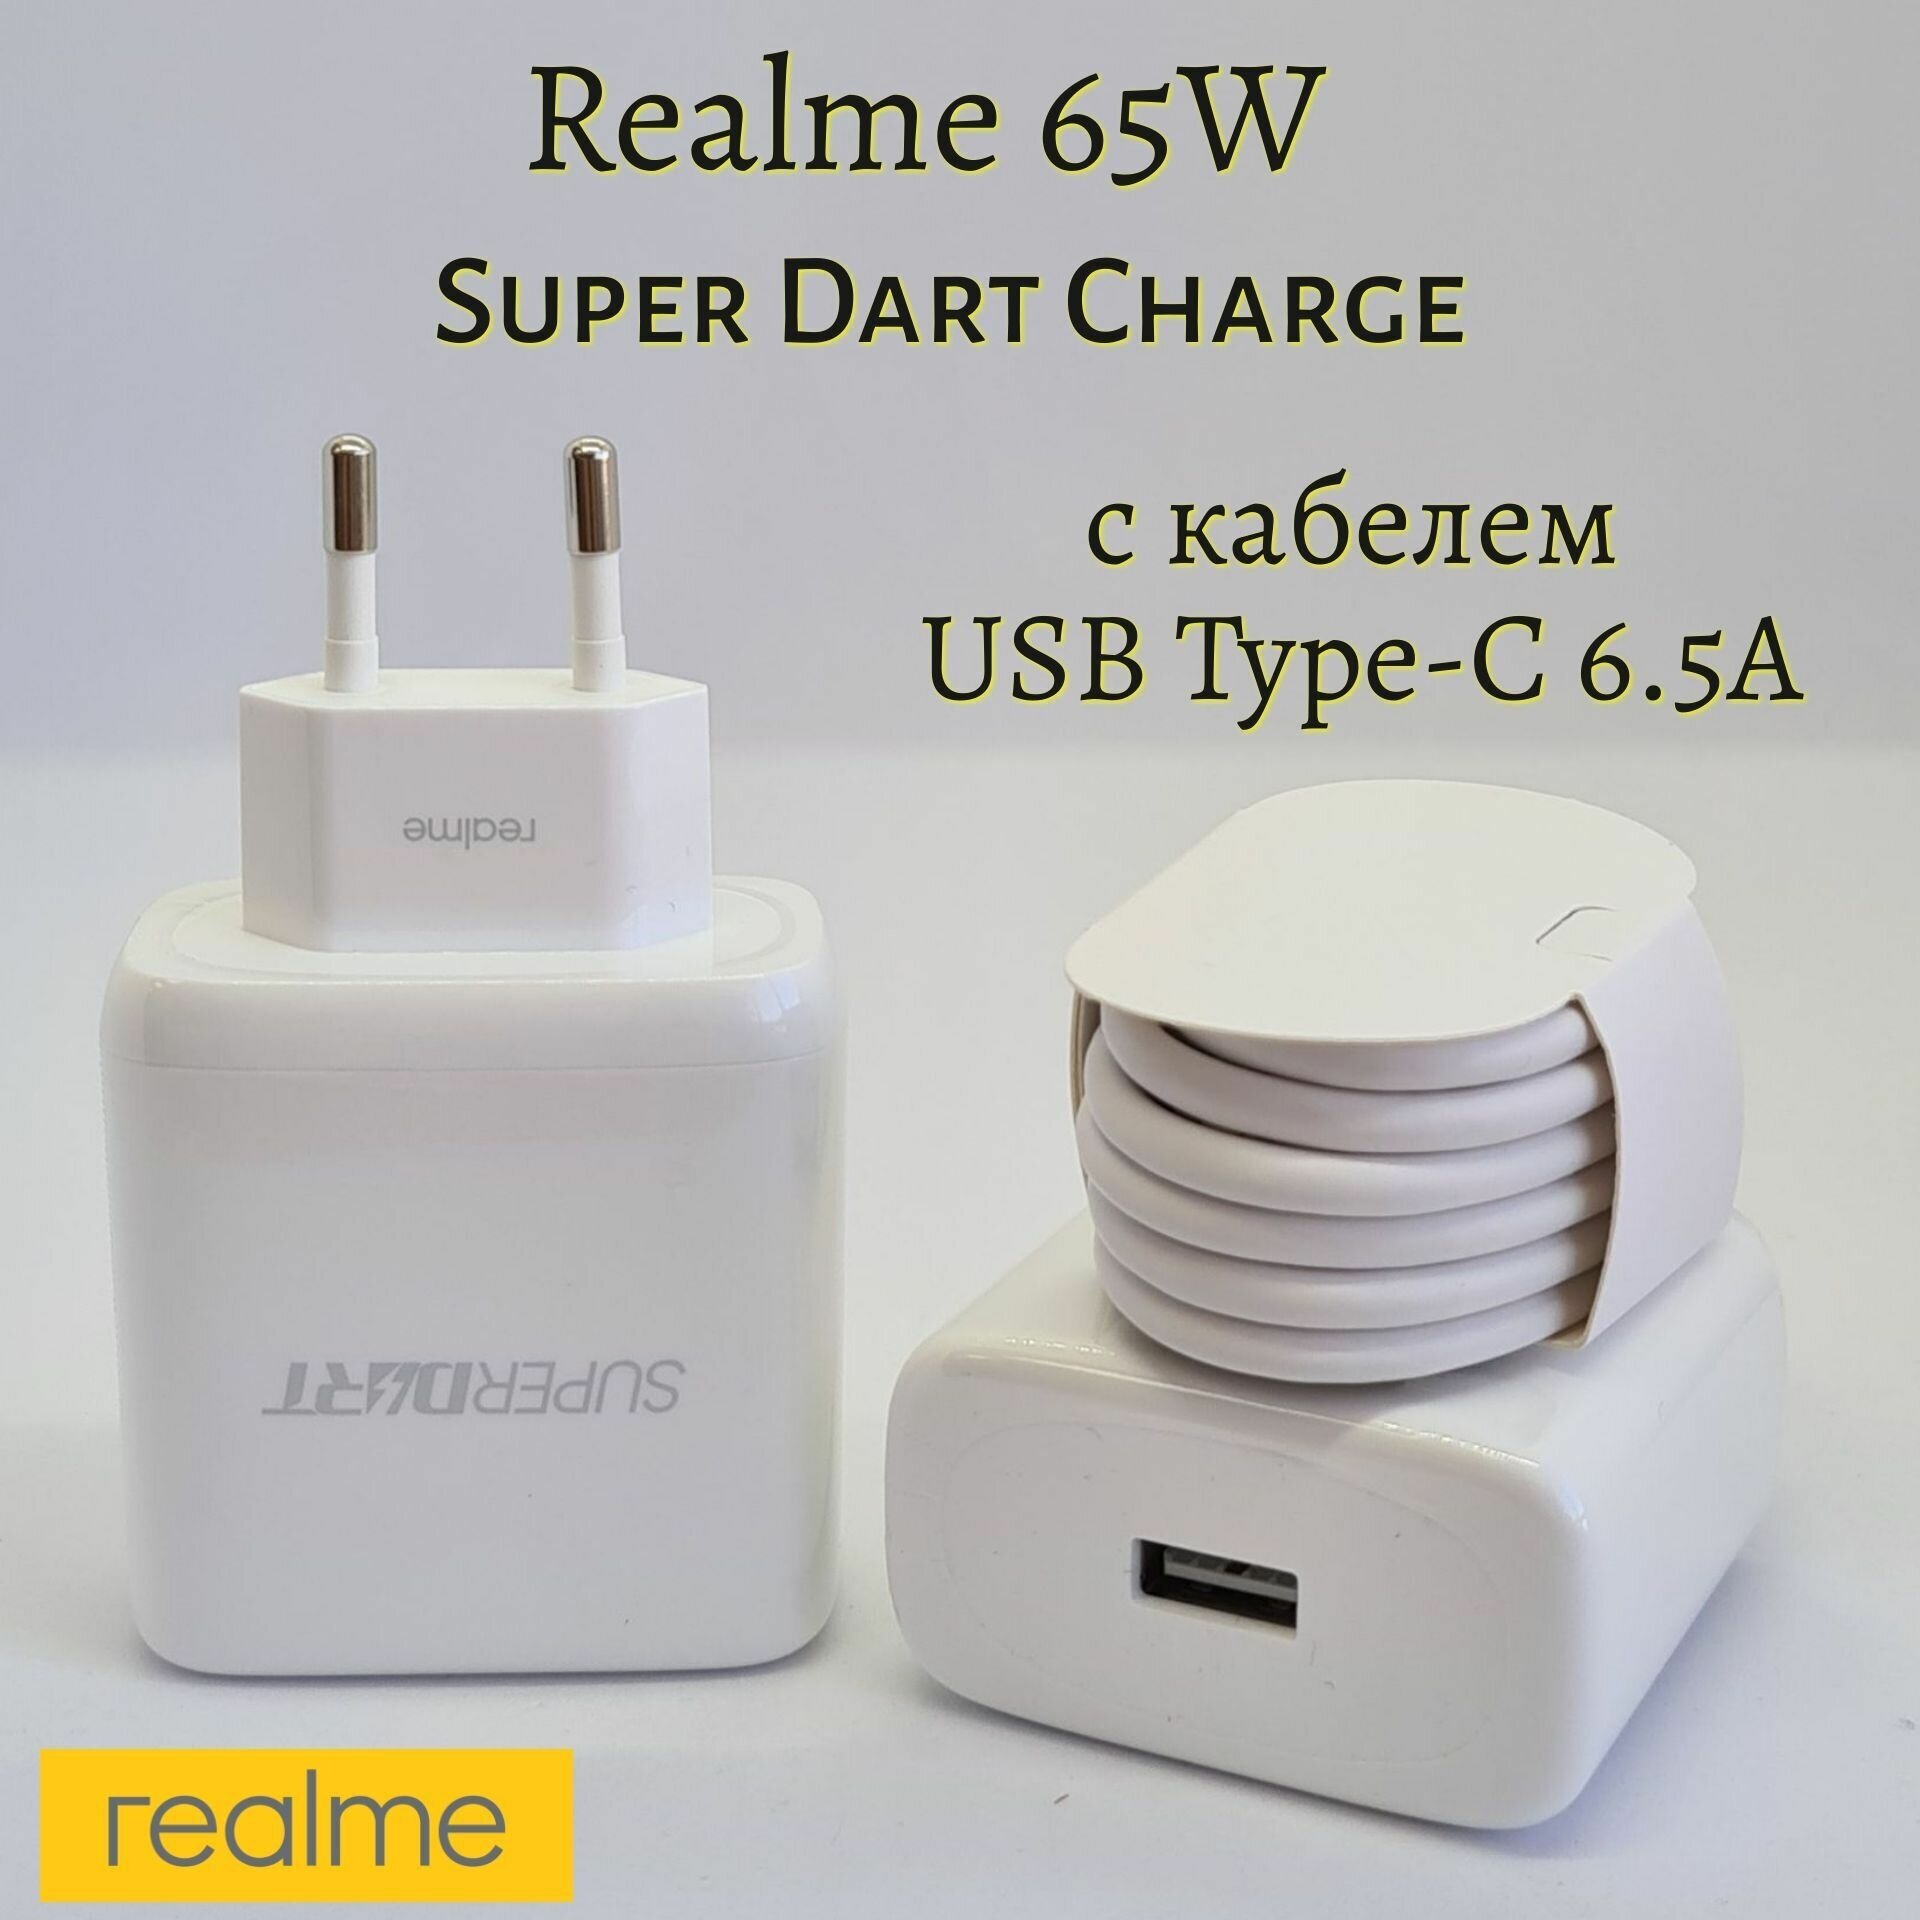 Сетевое зарядное устройство Realme с USB входом 65W в комплекте с кабелем USB Type-C 6.5A/Super Dart Charge/